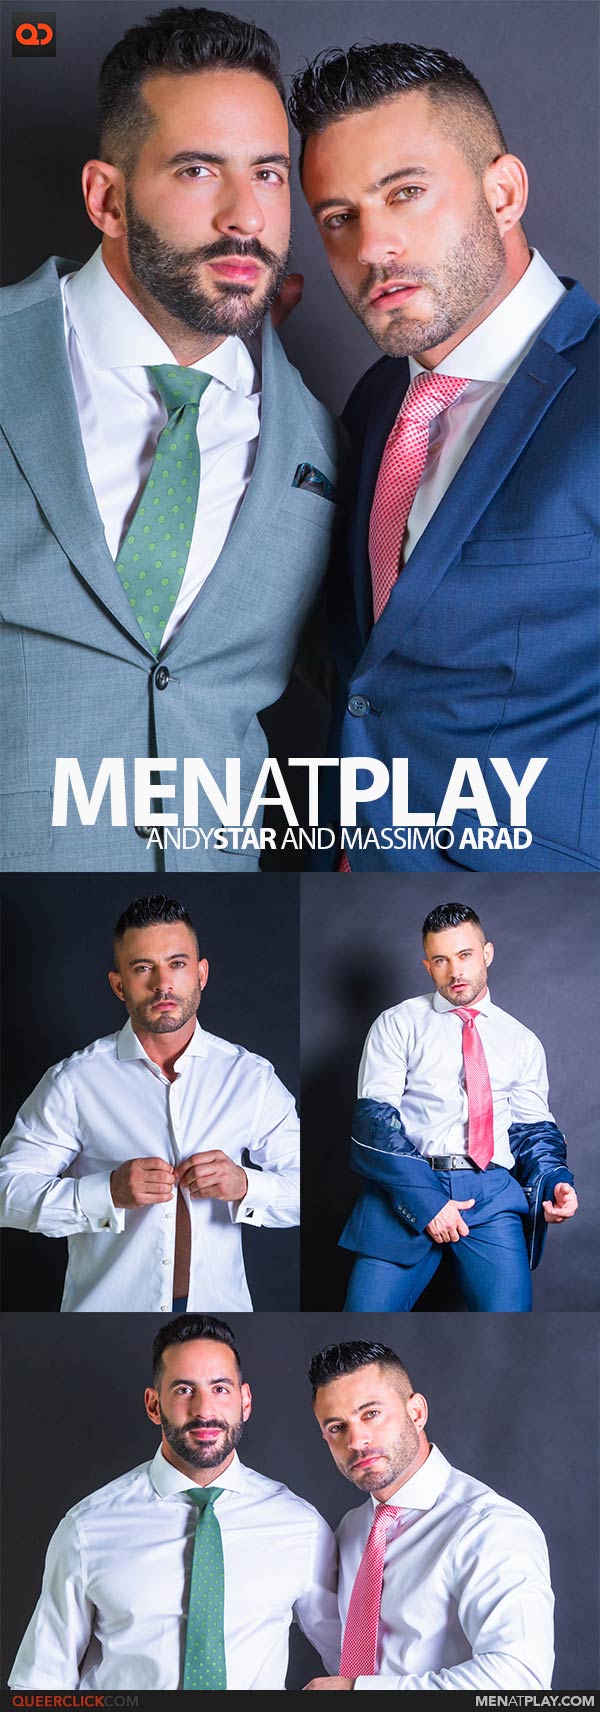 MenAtPlay: Andy Star and Massimo Arad